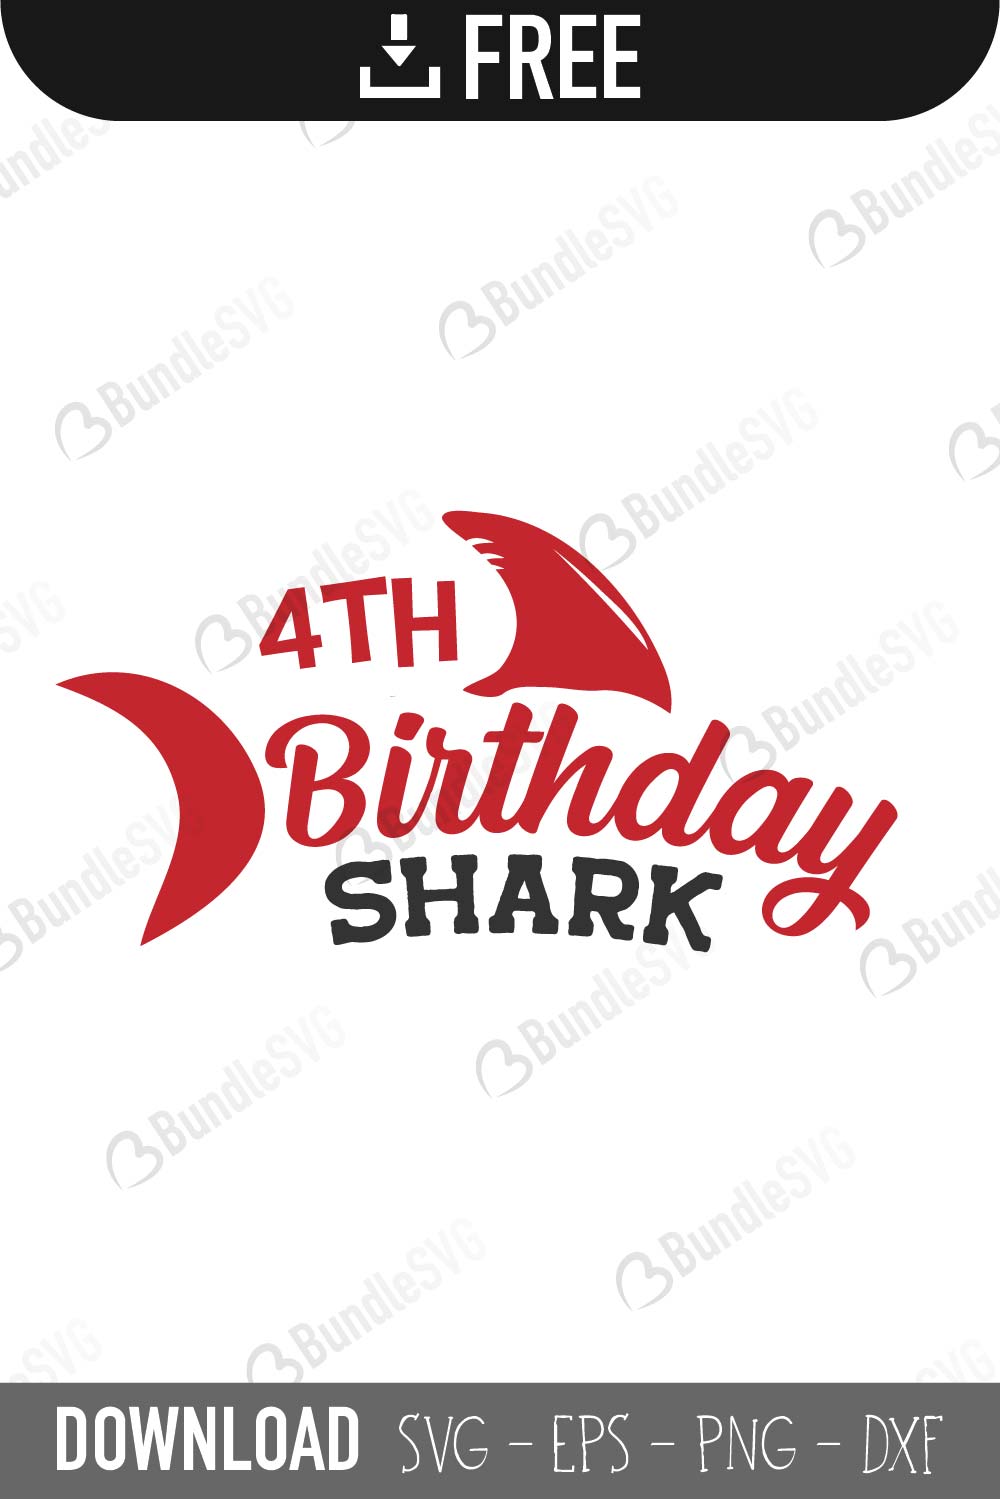 Birthday Shark Svg Cut Files Free Download Bundlesvg